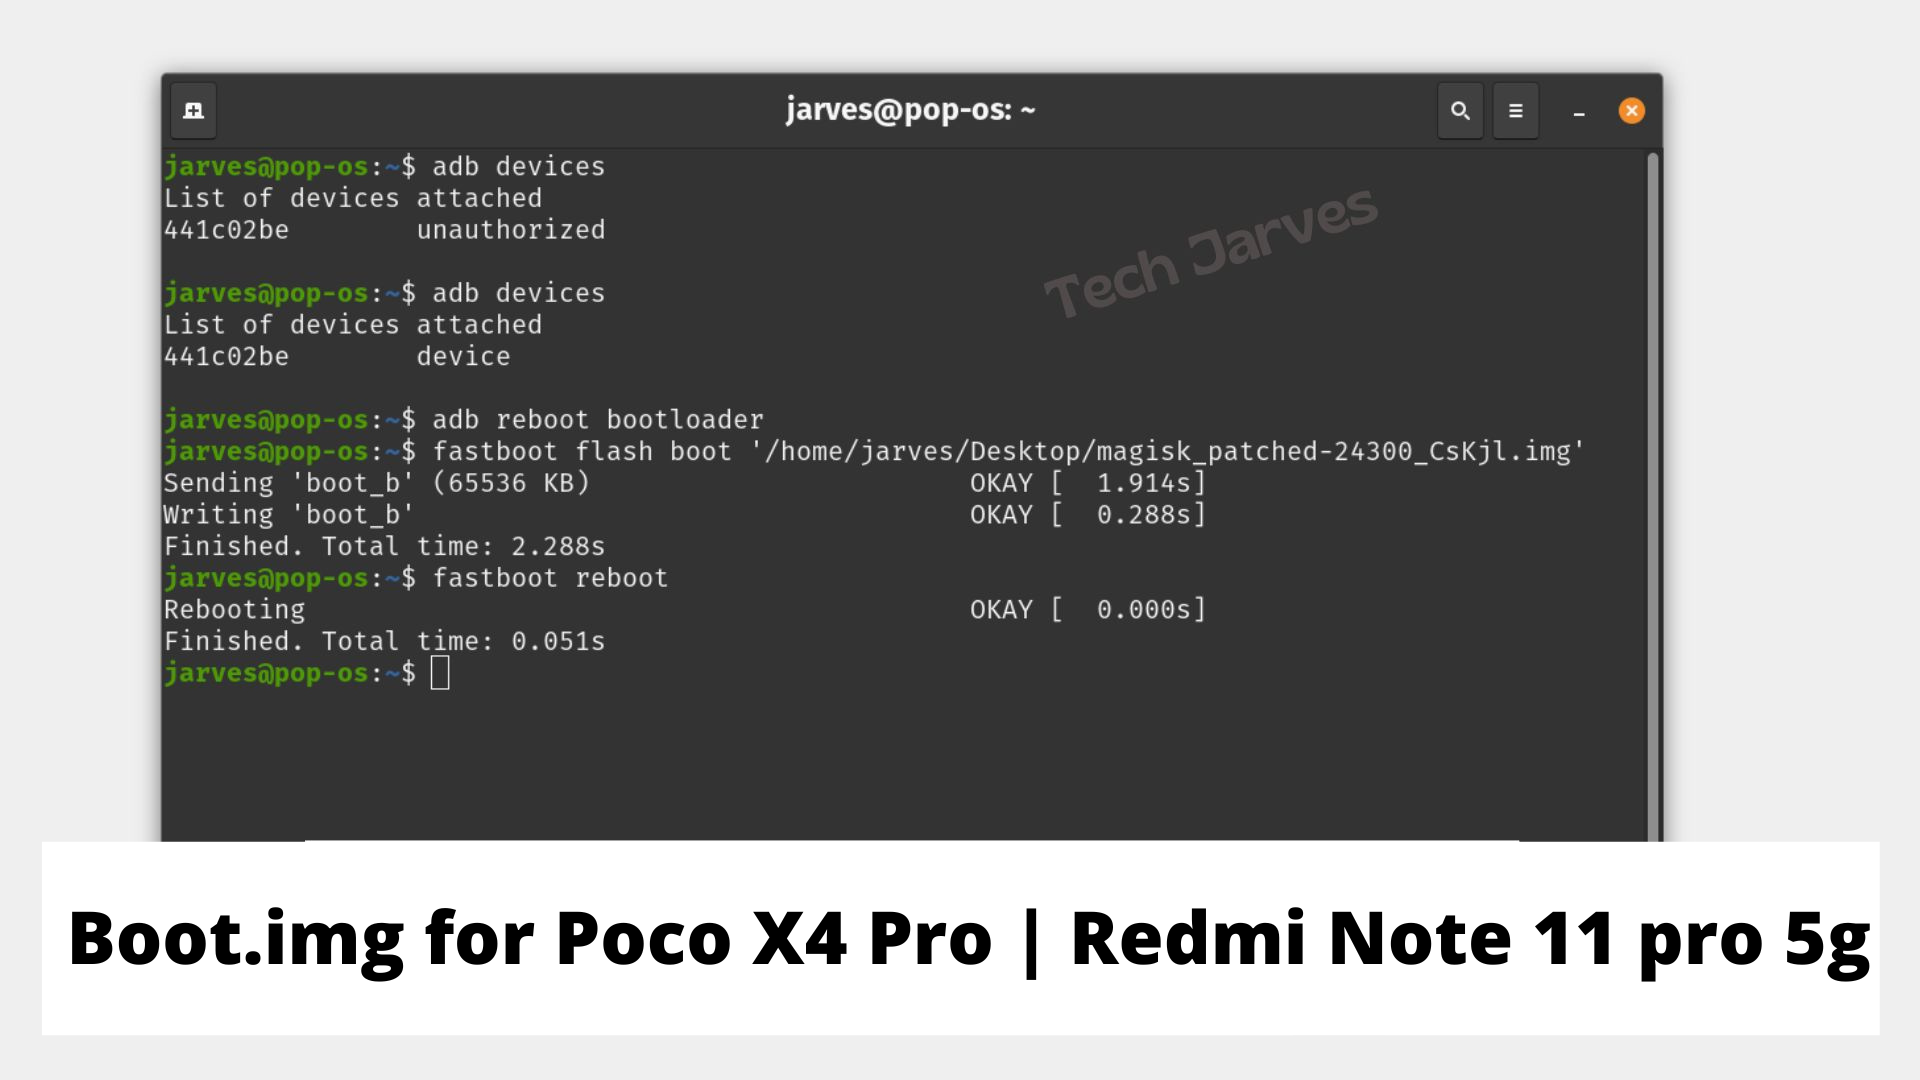 Boot.img for Poco X4 Pro Redmi Note 11 pro 5g